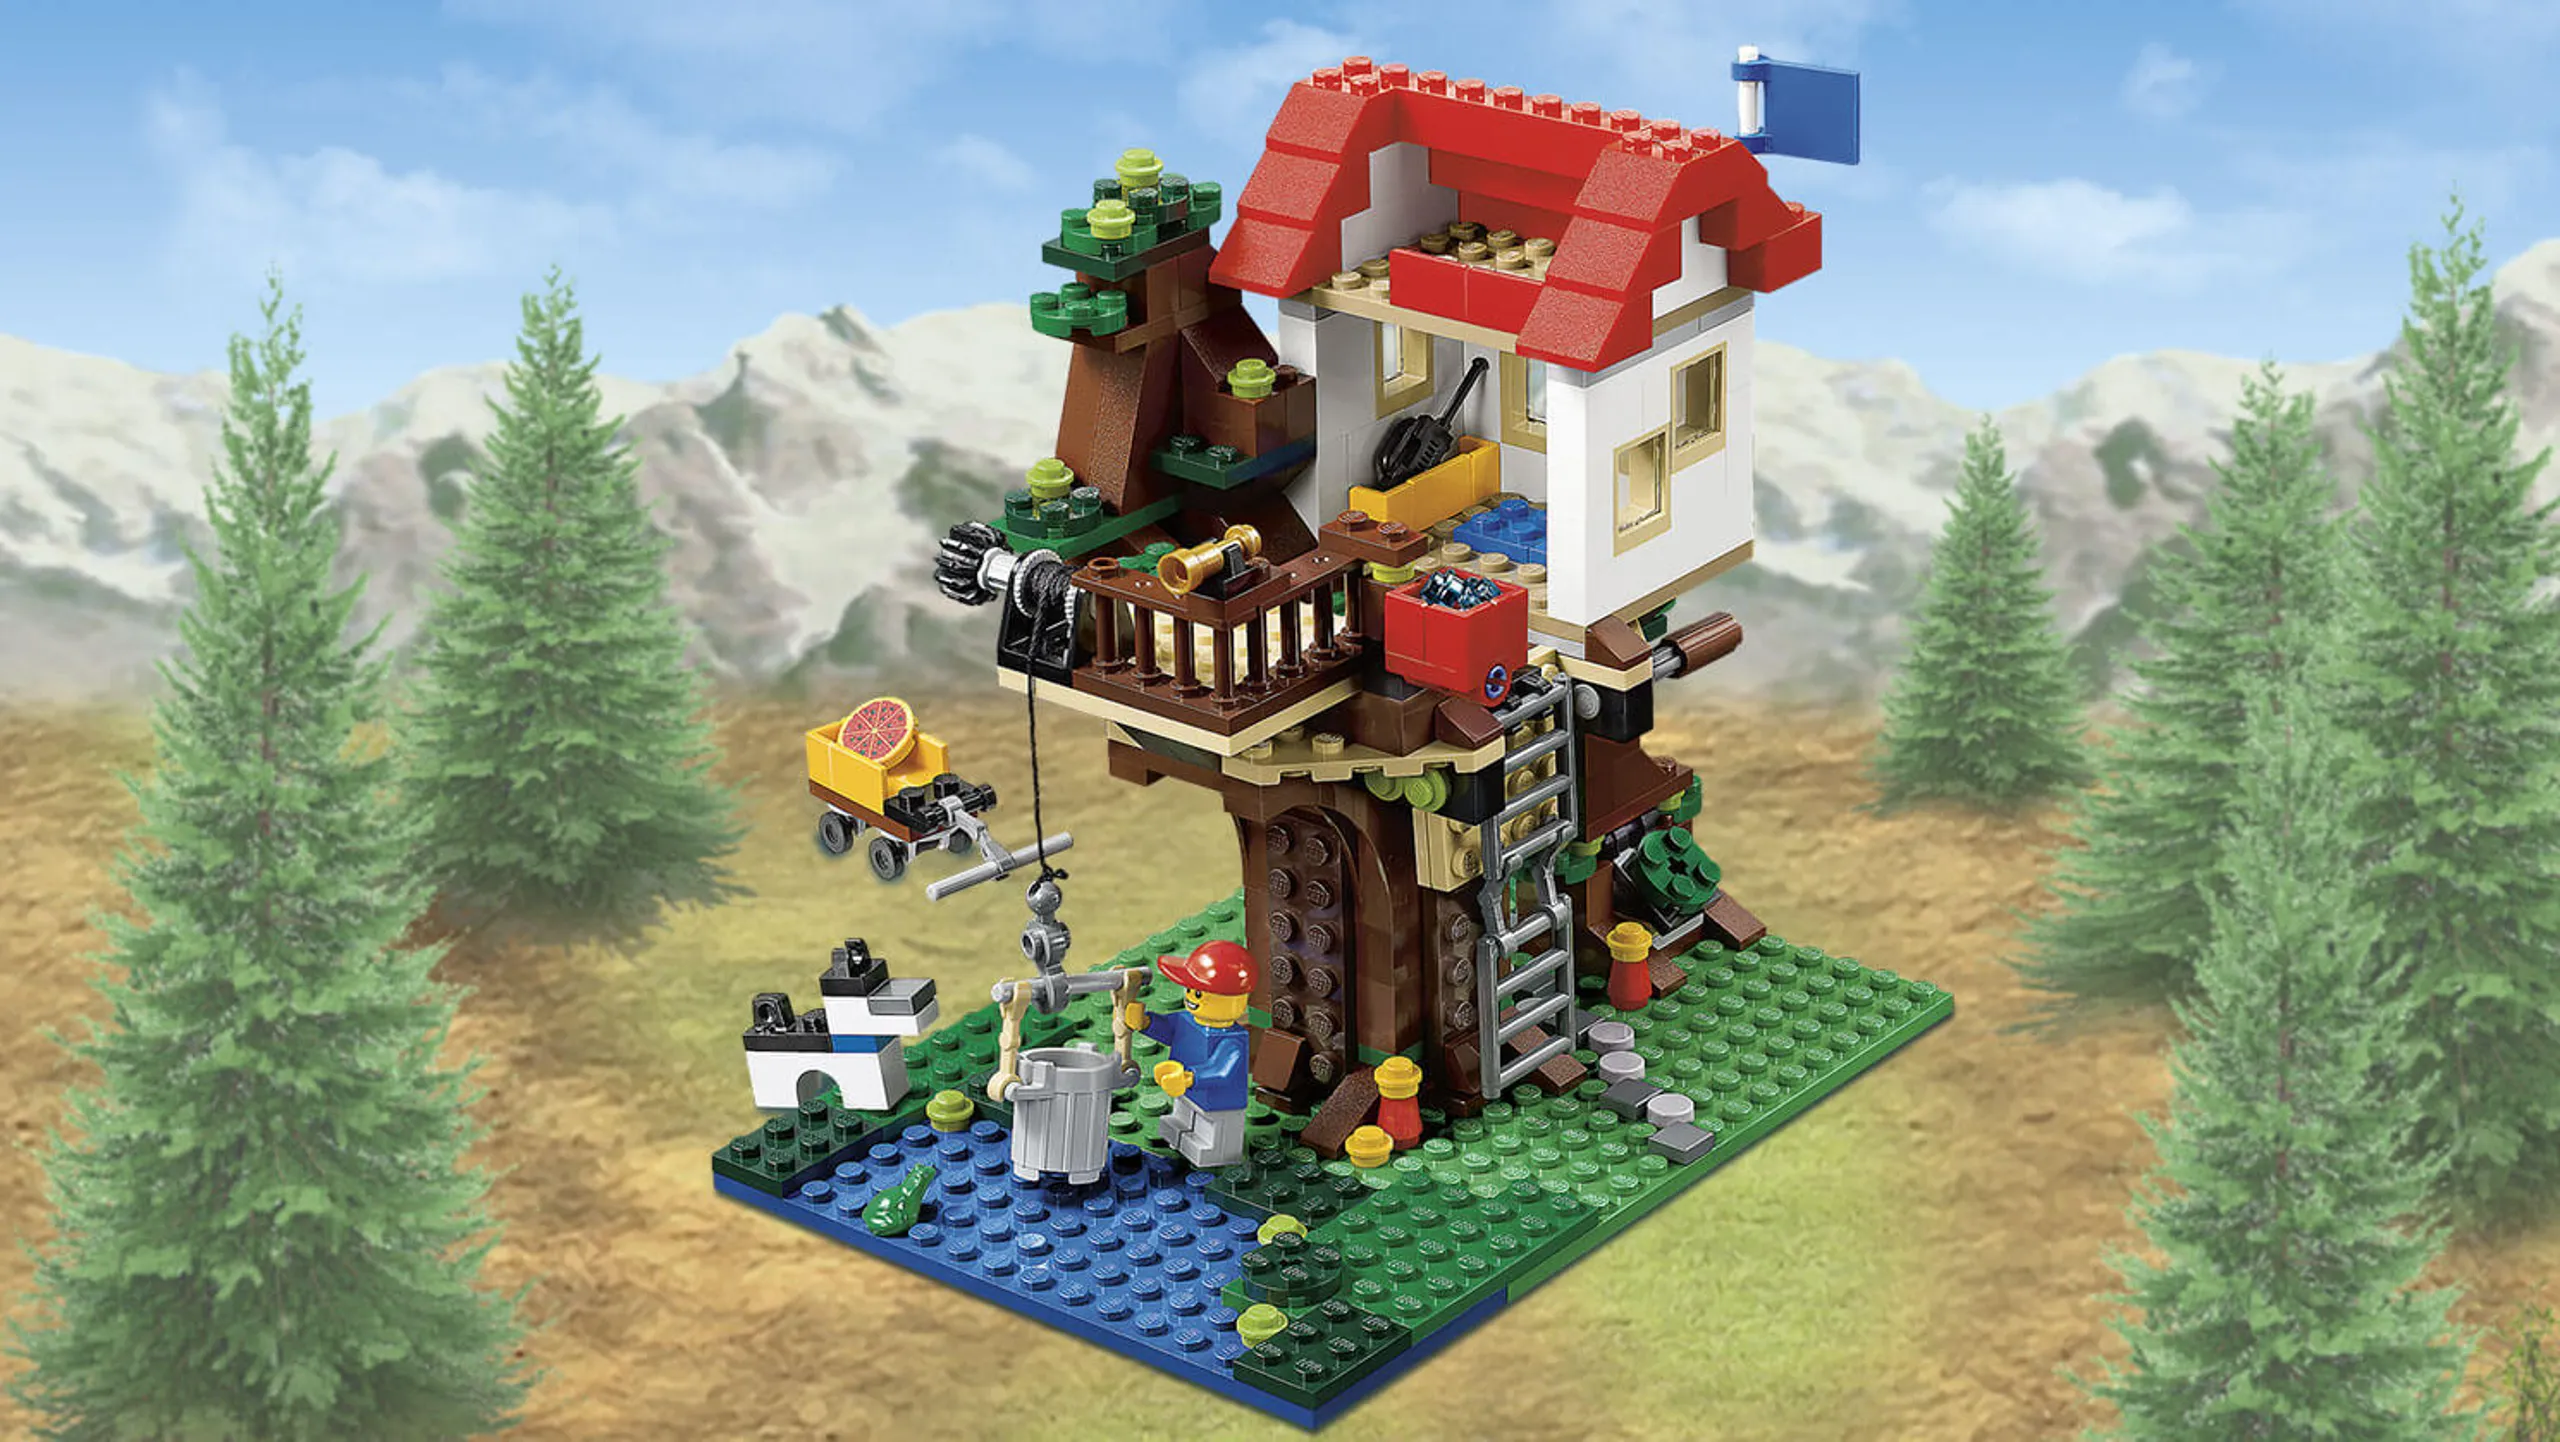 Lego univers petite villa -7 ans +